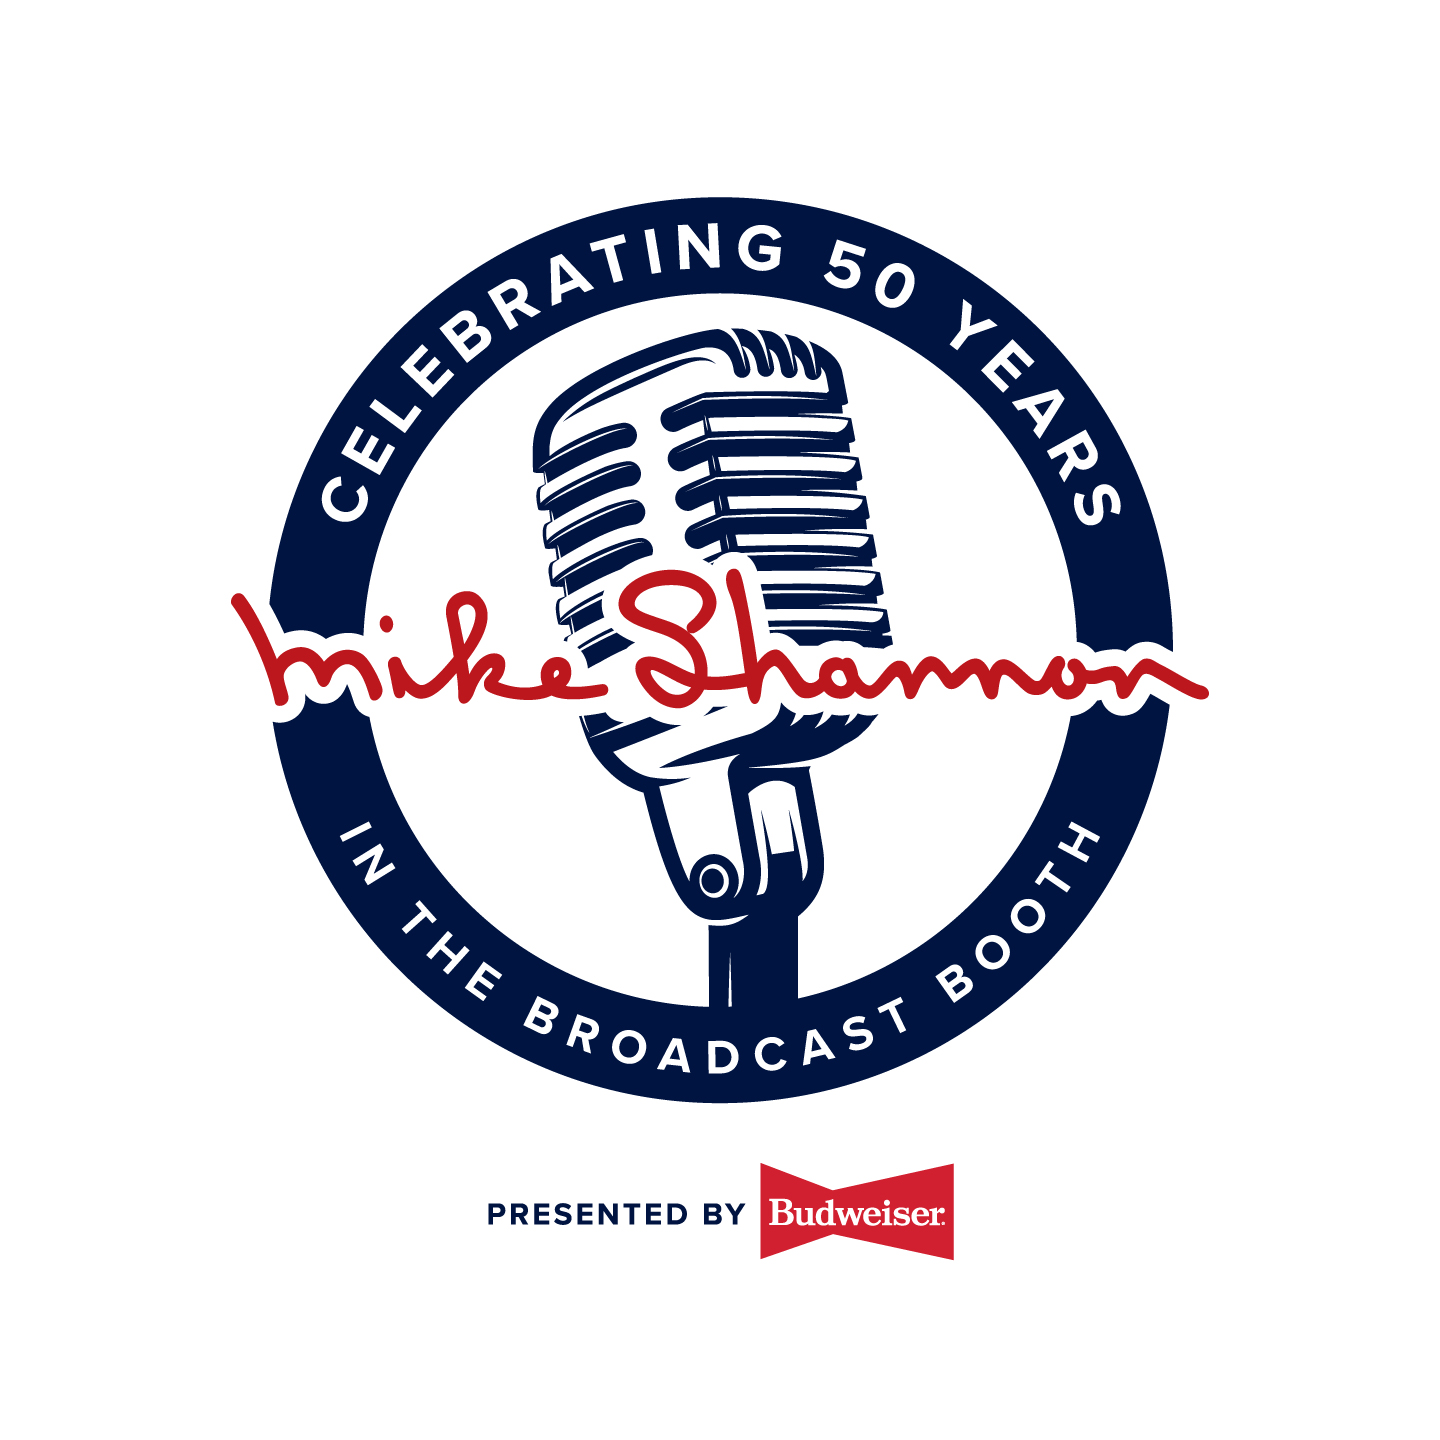 Bob Uecker Ceremony - 50 Years Of Broadcasting